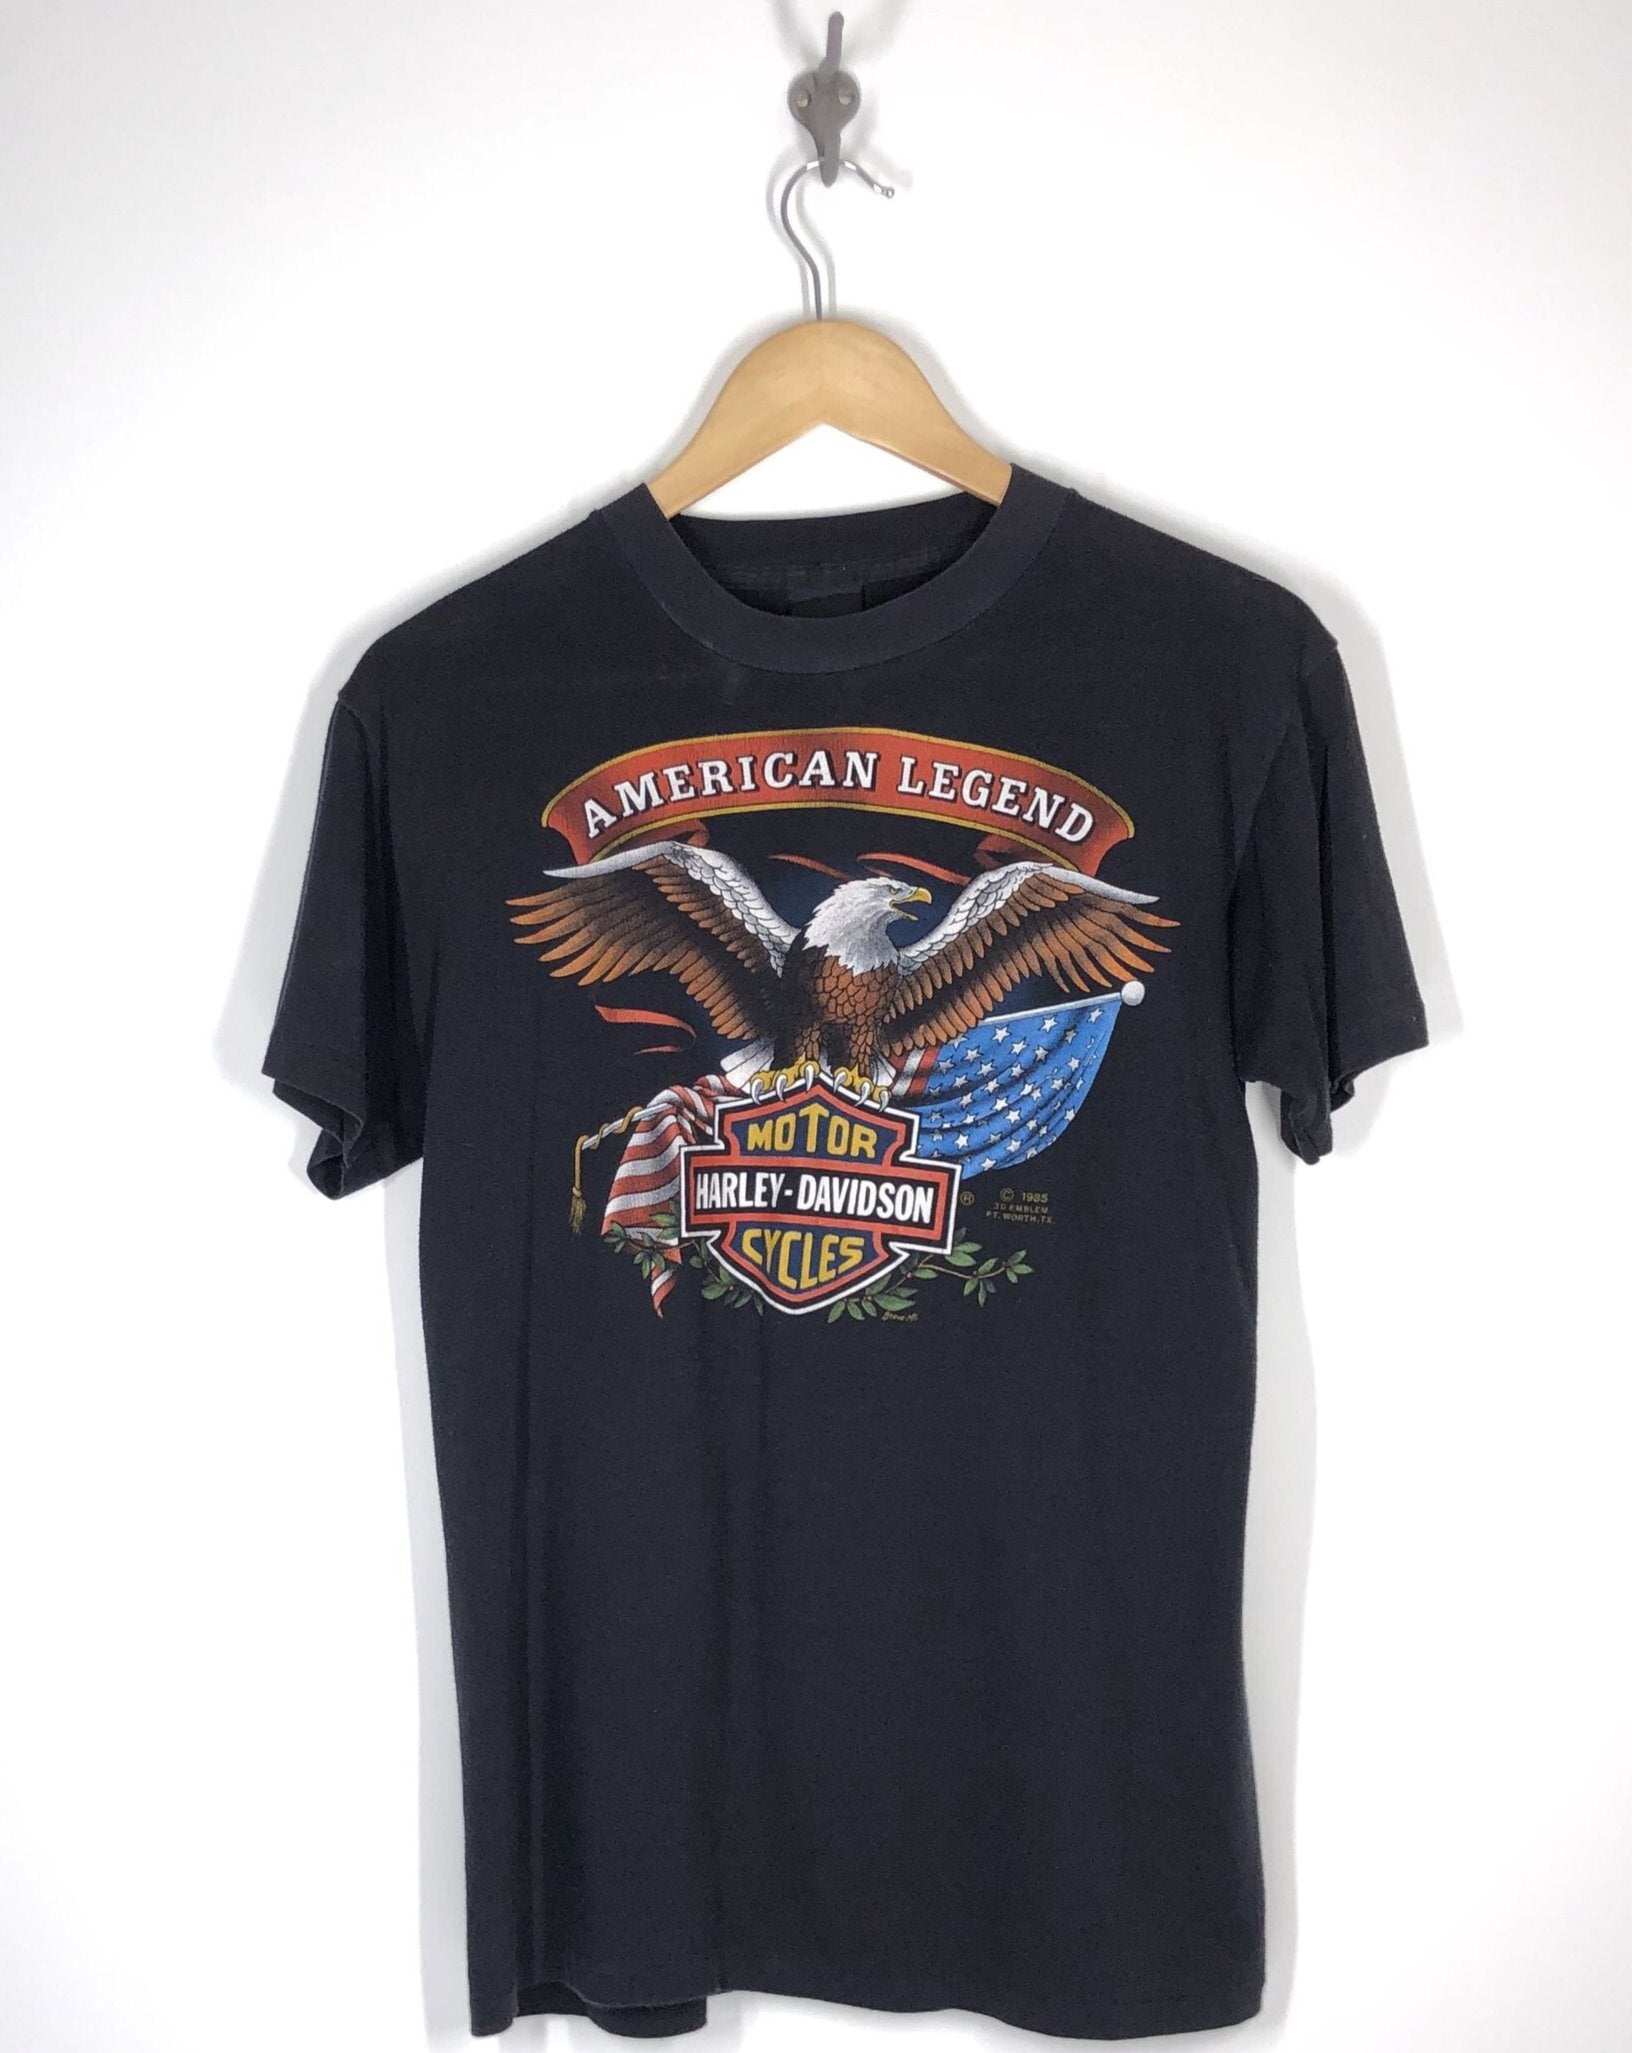 Harley Davidson Motorcycles T Shirt - 3D Emblem - American Legend - Duluth, MN 1985 - L